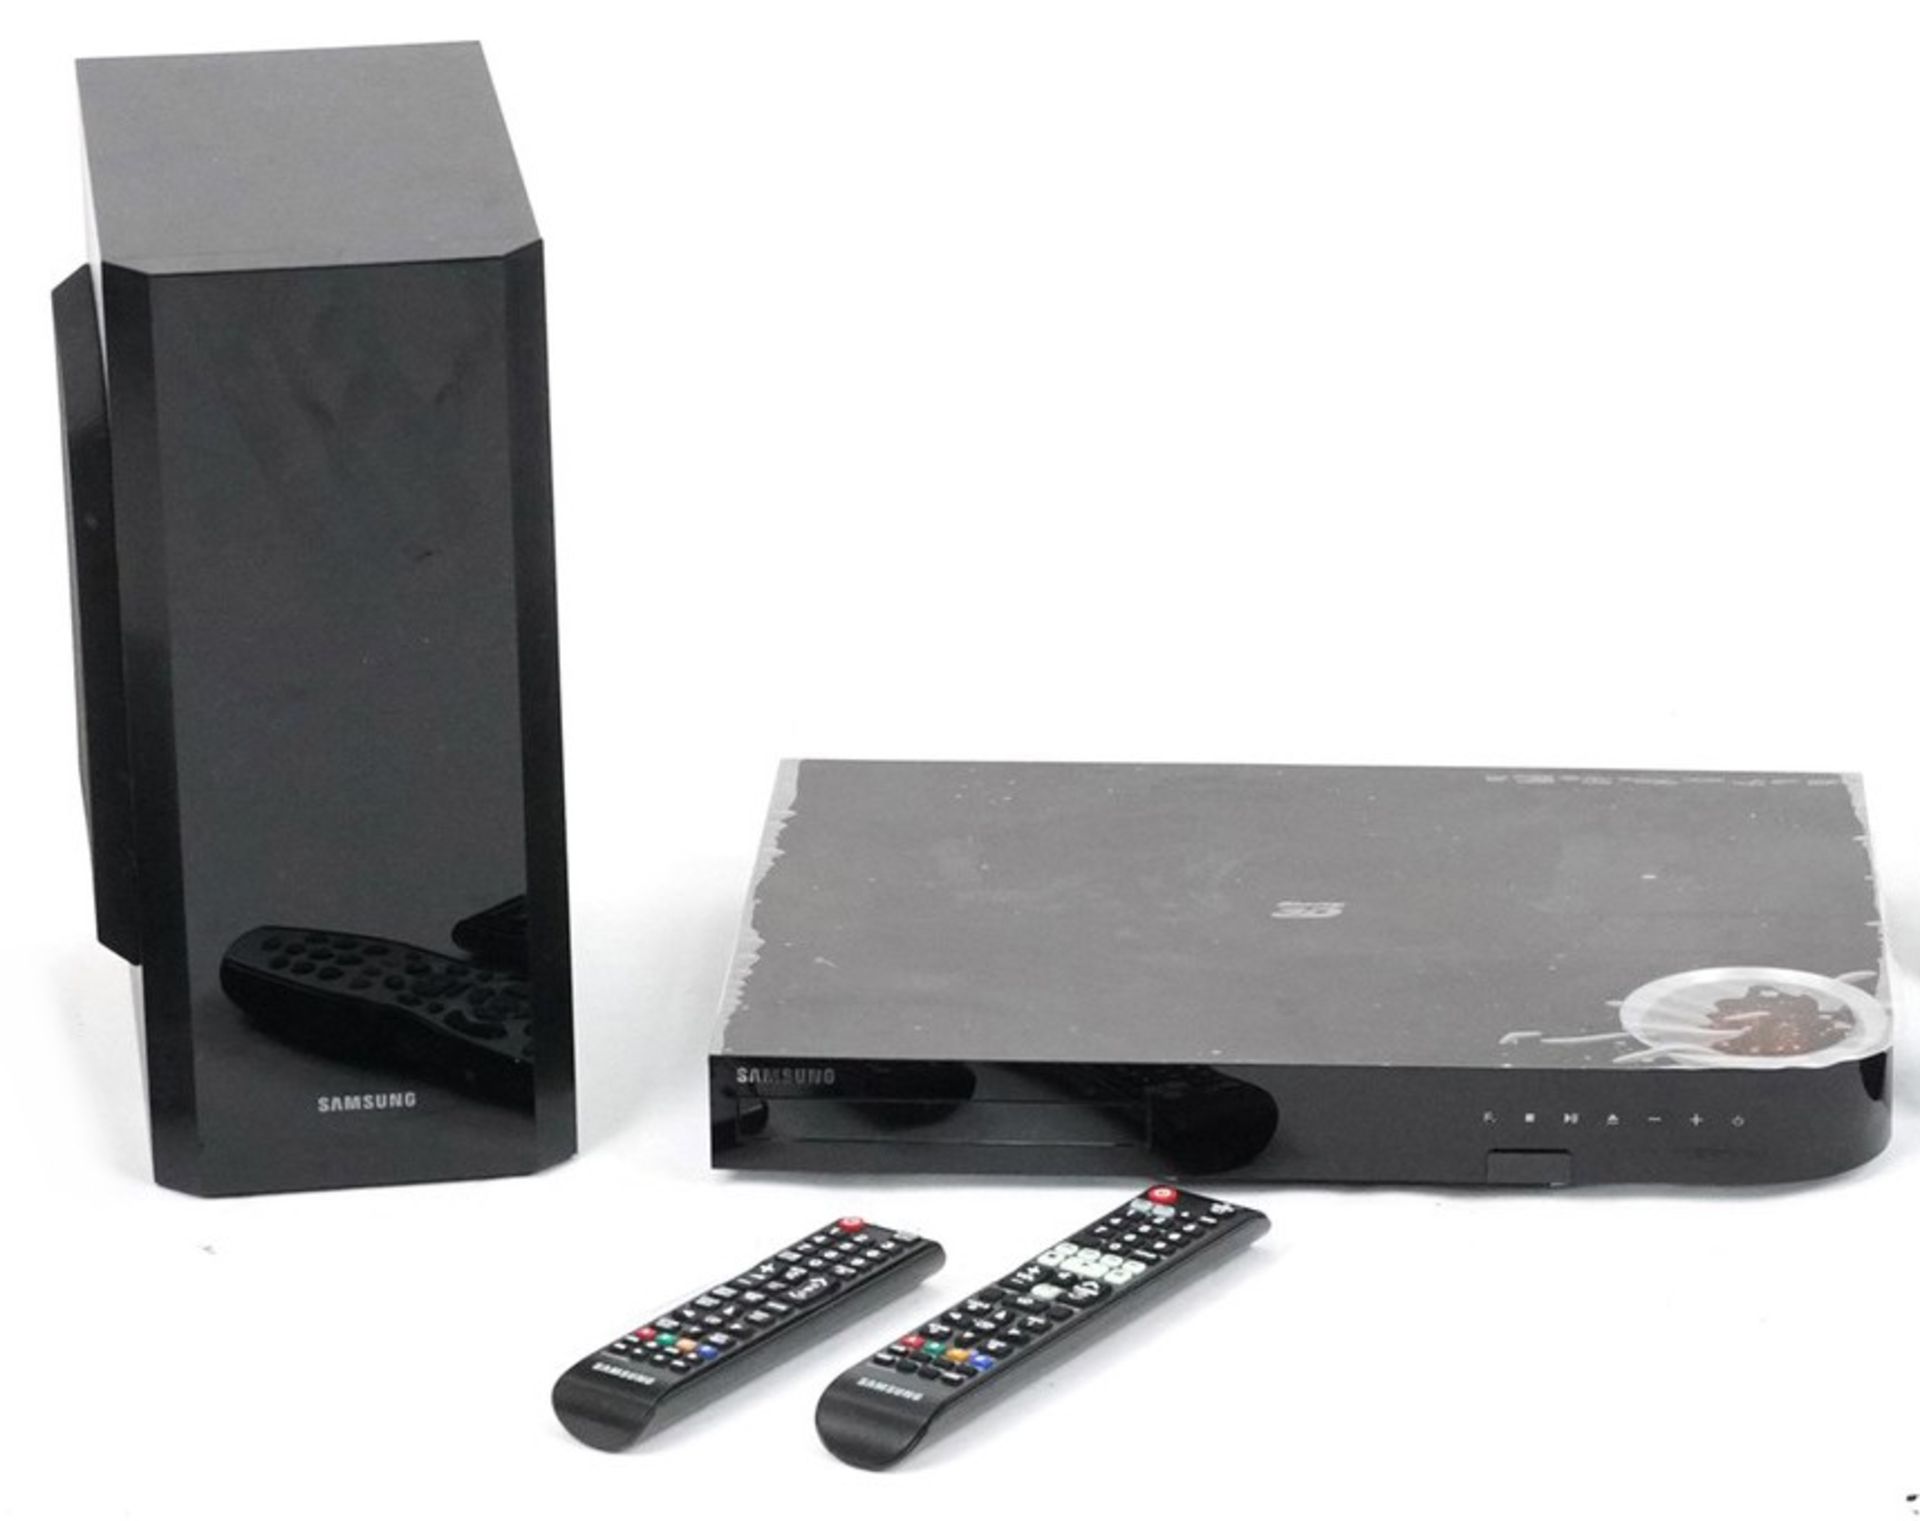 Samsung 75 inch F6400 series 6 smart 3D LED TV model with Samsung DVD player and surround sound - Bild 3 aus 6